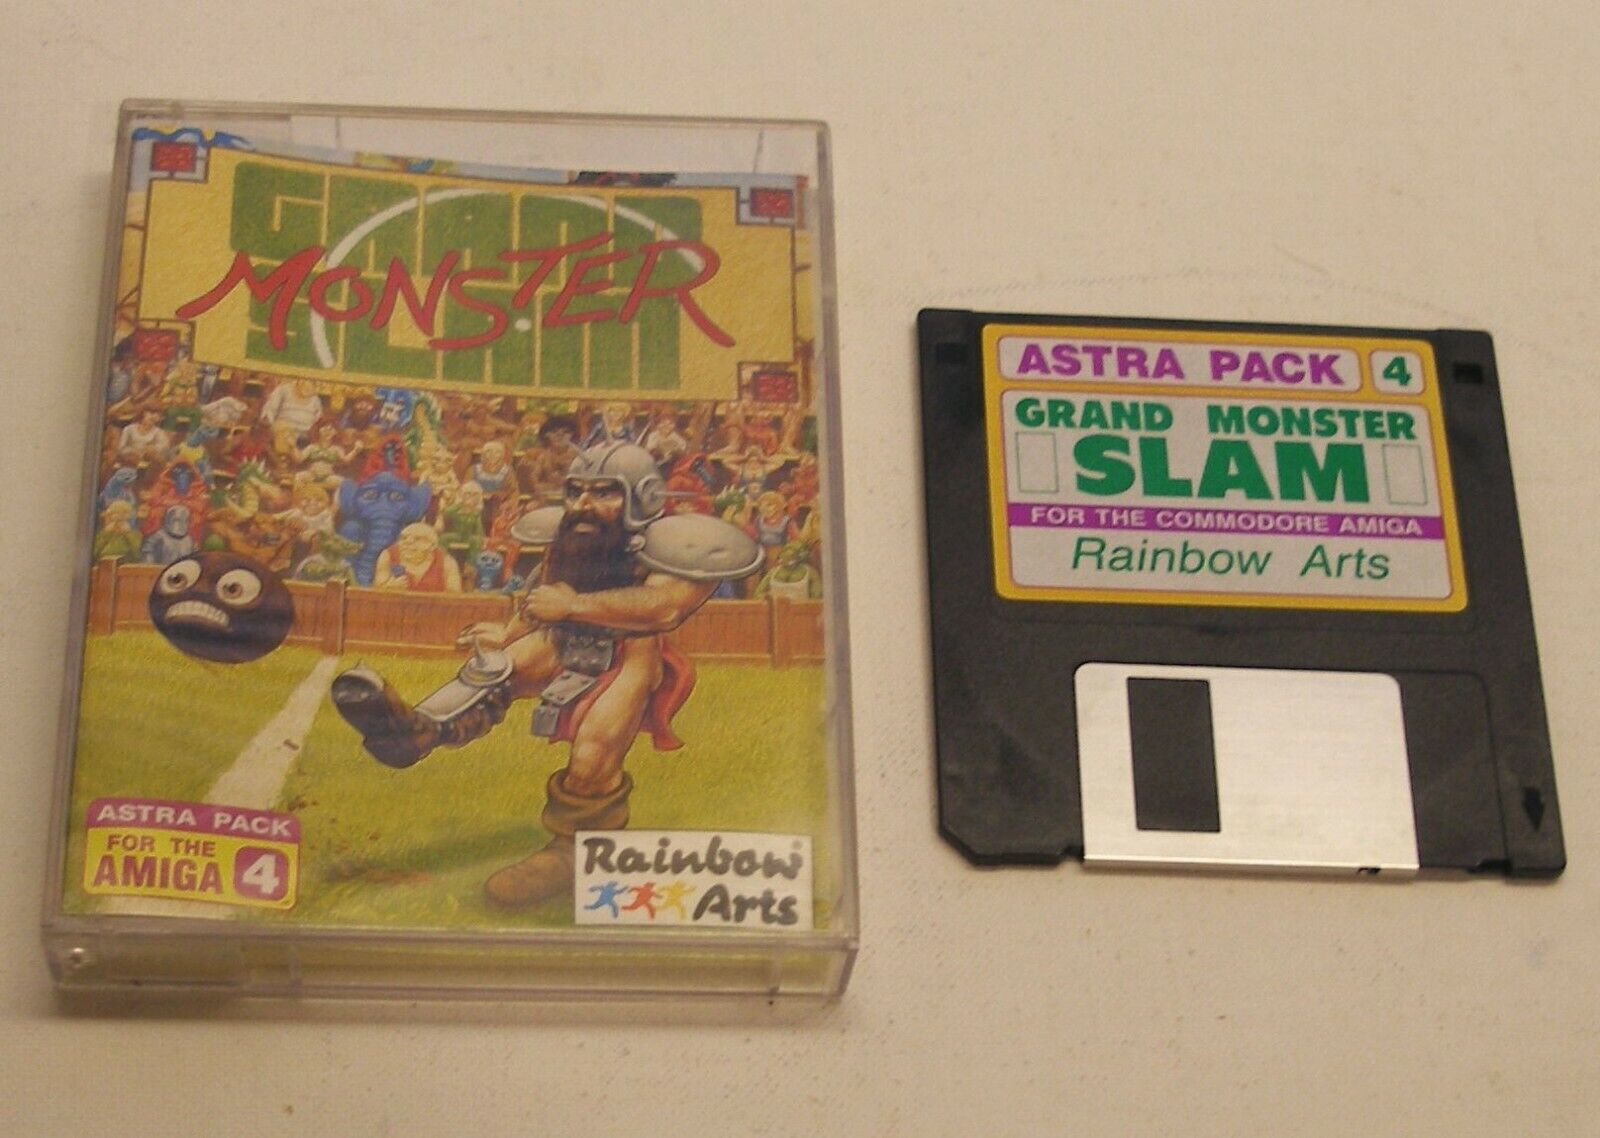 Grand Monster Slam by Rainbow Arts for Commodore Amiga